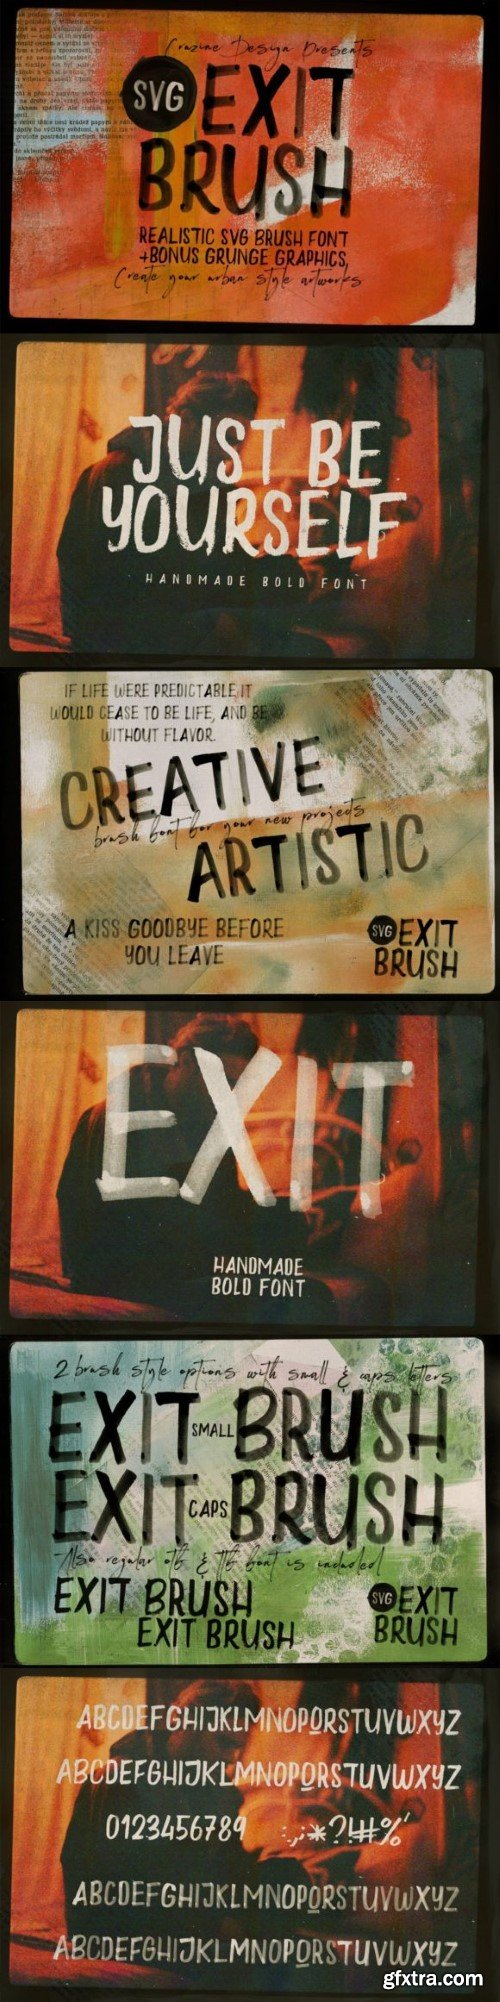 Exit Brush Font